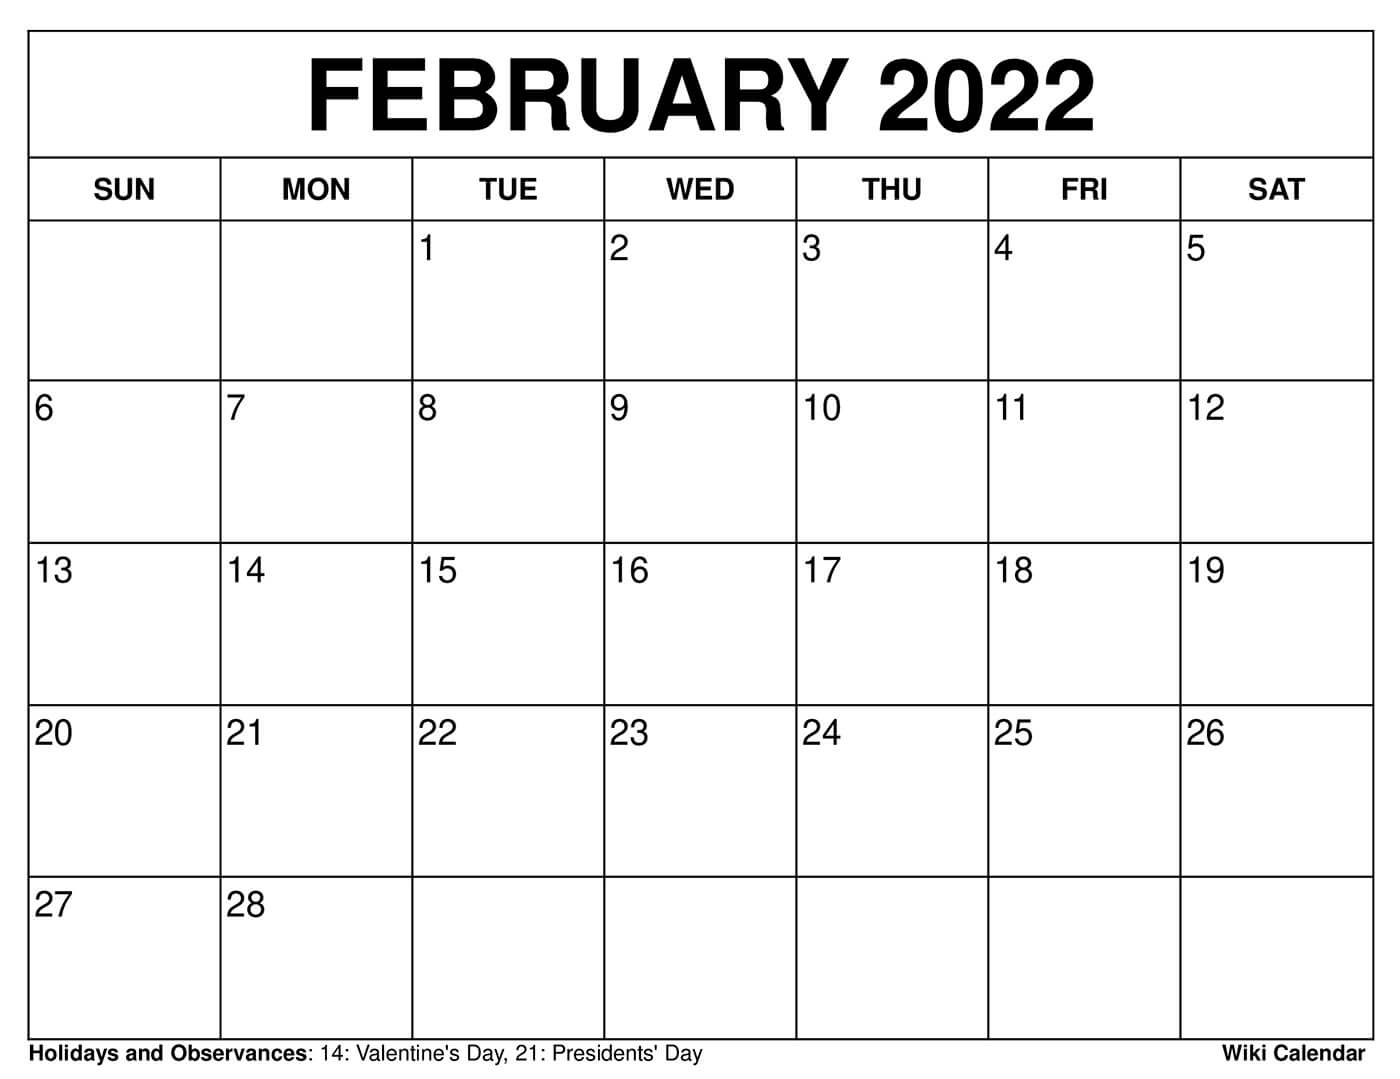 Monthly Calendar February 2022 Free Printable February 2022 Calendars - Wiki Calendar